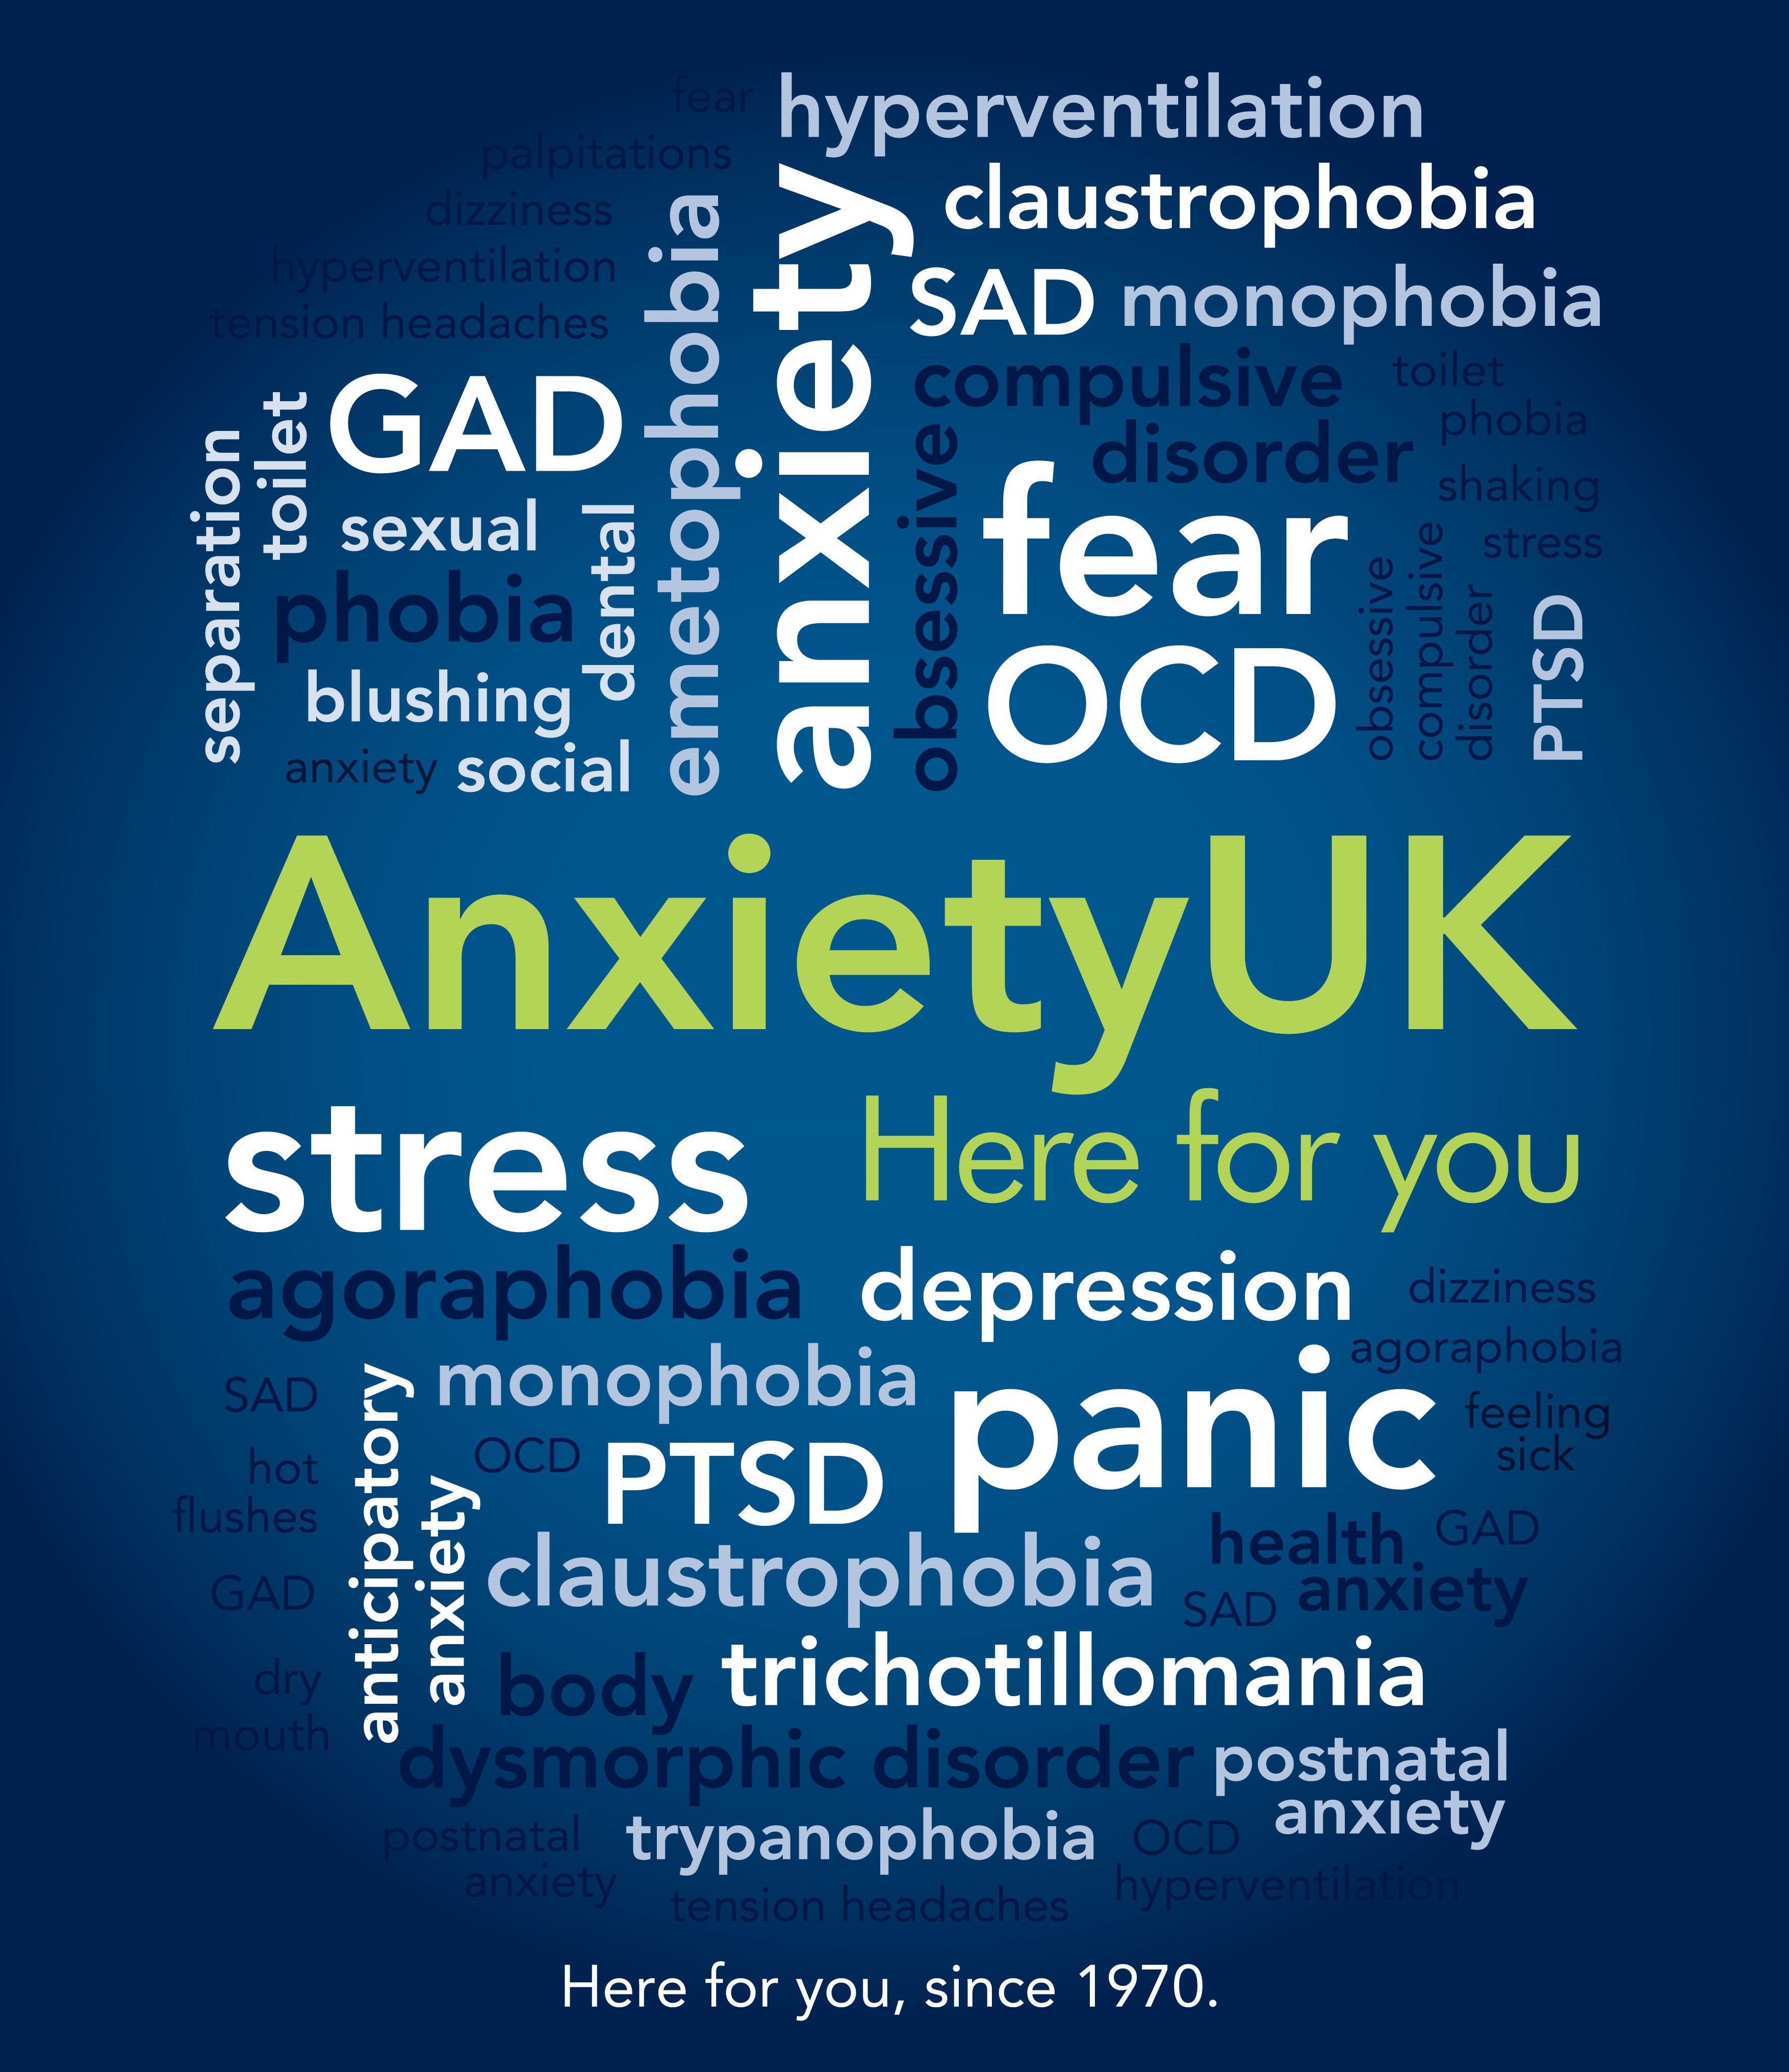 help raise awareness of anxiety uk - anxiety uk